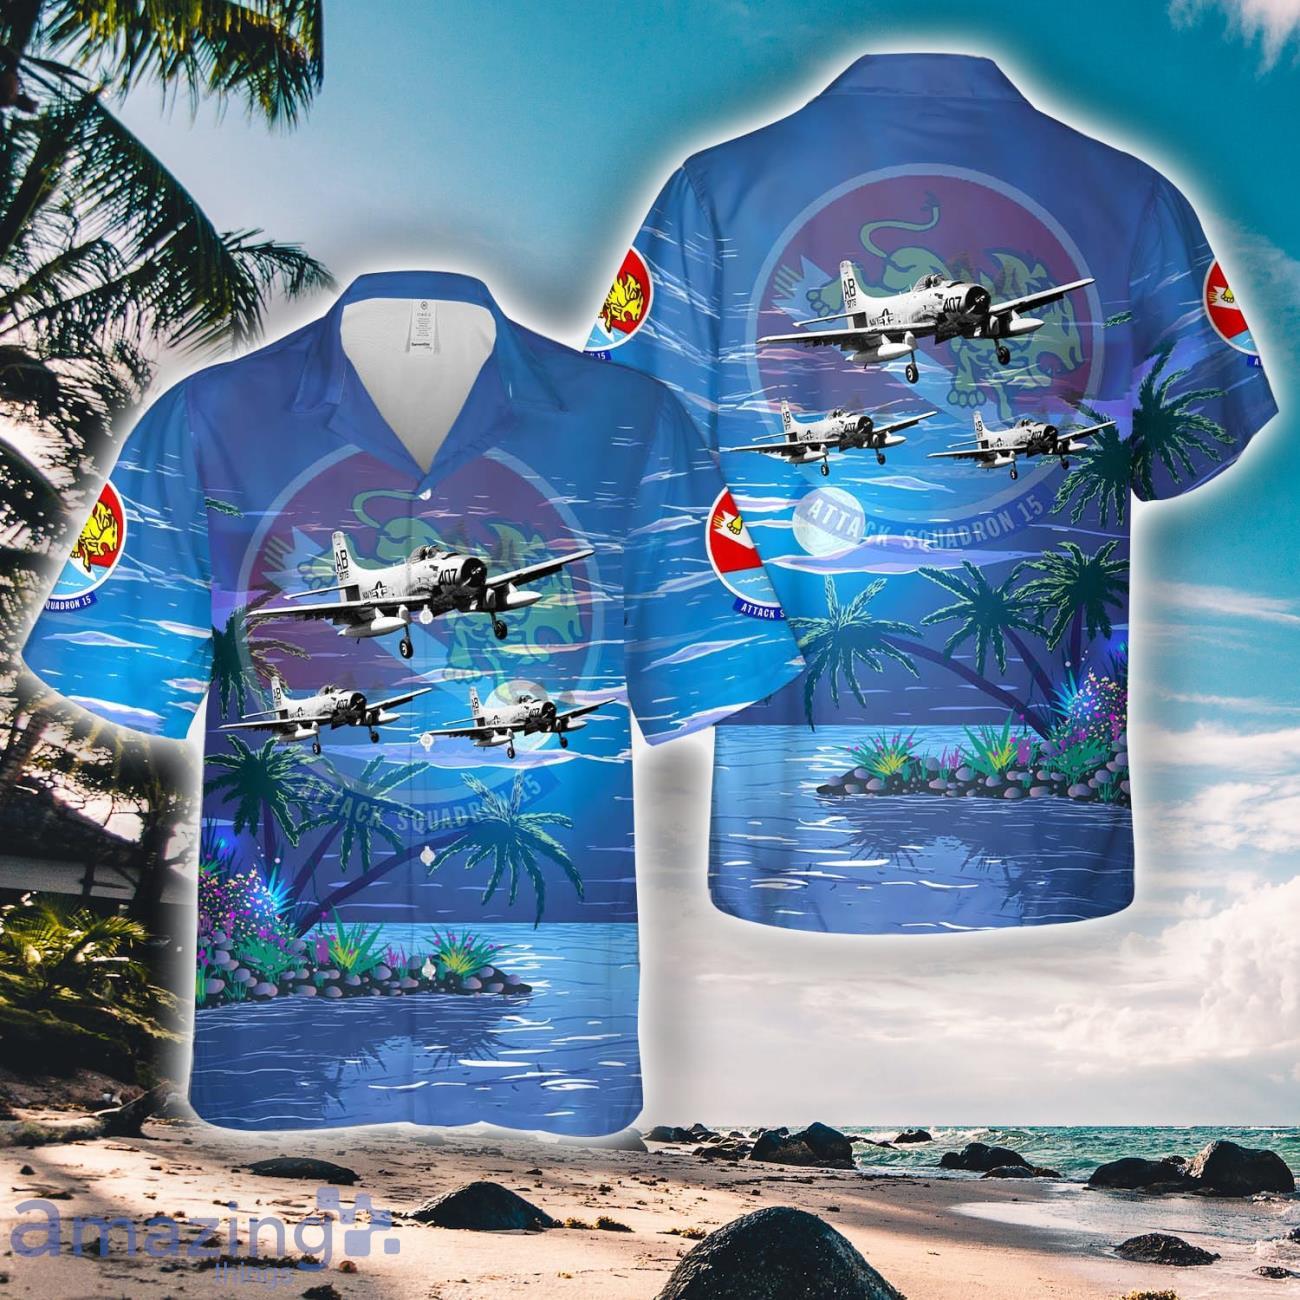 U.S. Navy Douglas AD-6 Skyraider (BuNo 139776) of Attack Squadron 15 (VA-15) Valions 3D Hawaiian Shirt Product Photo 1